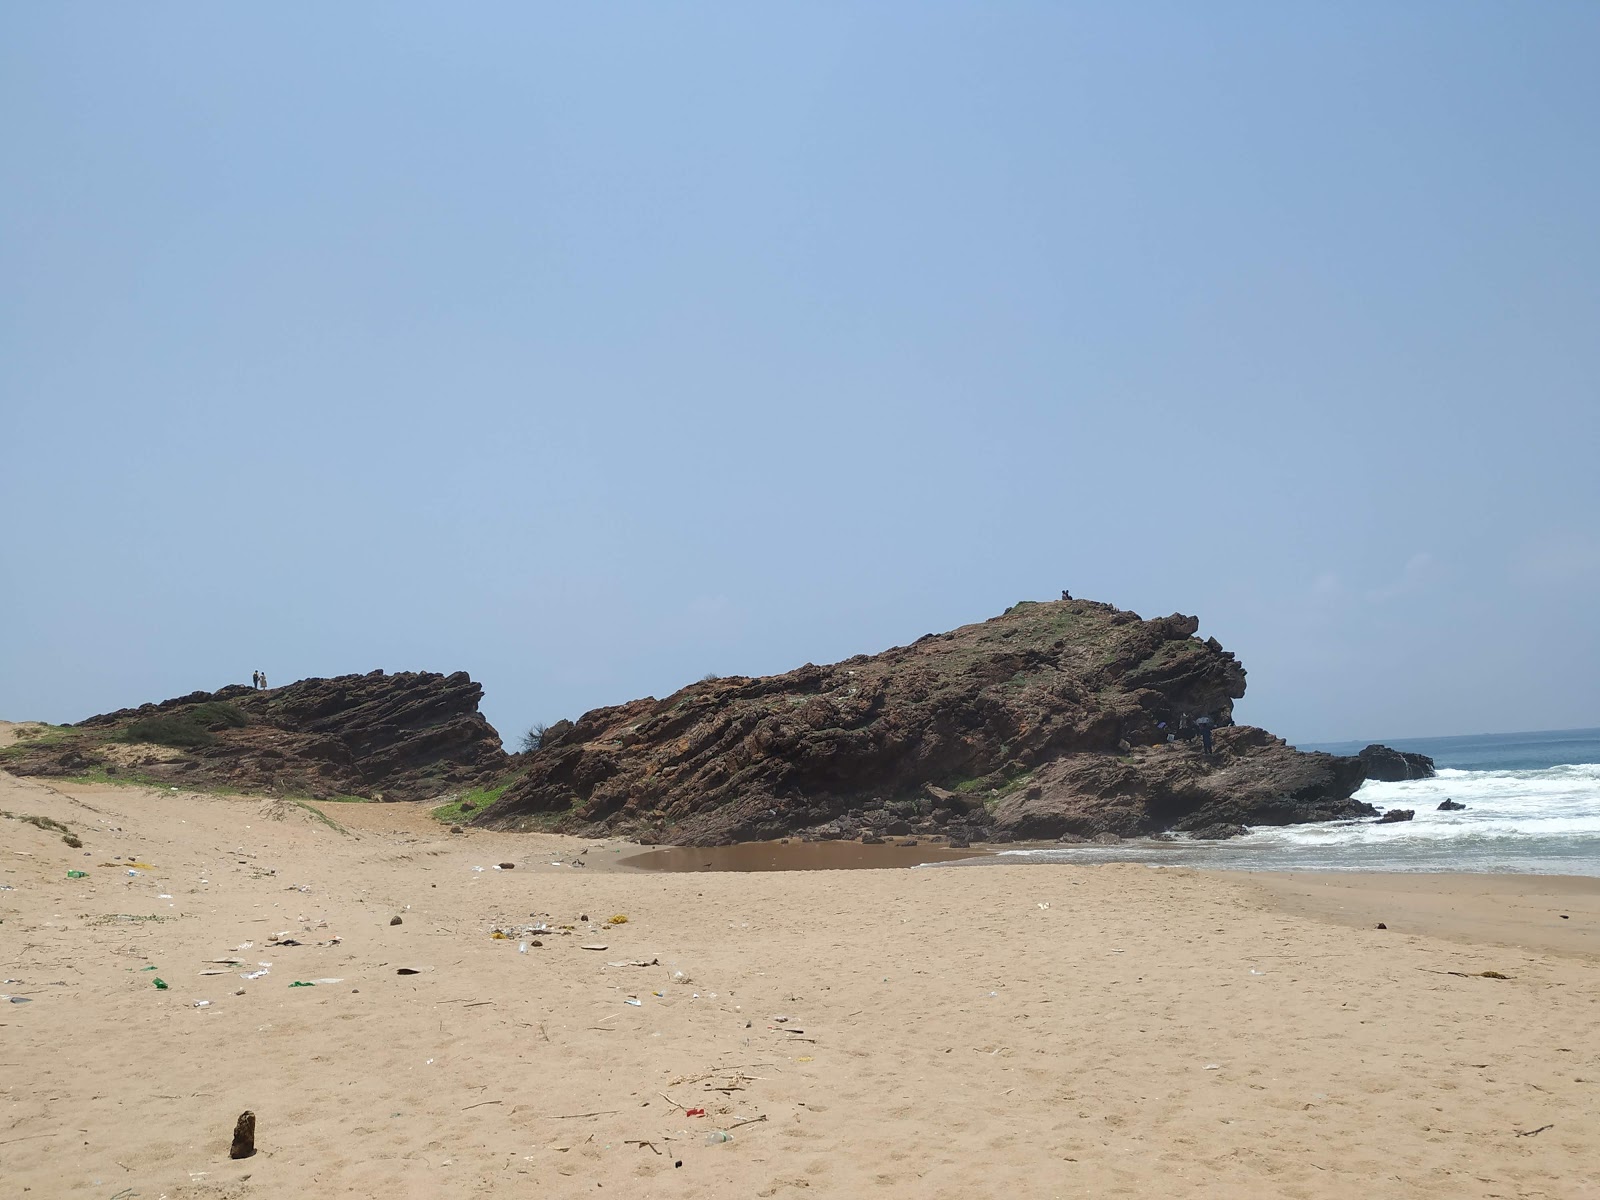 Fotografie cu Thanthadi Beach - locul popular printre cunoscătorii de relaxare